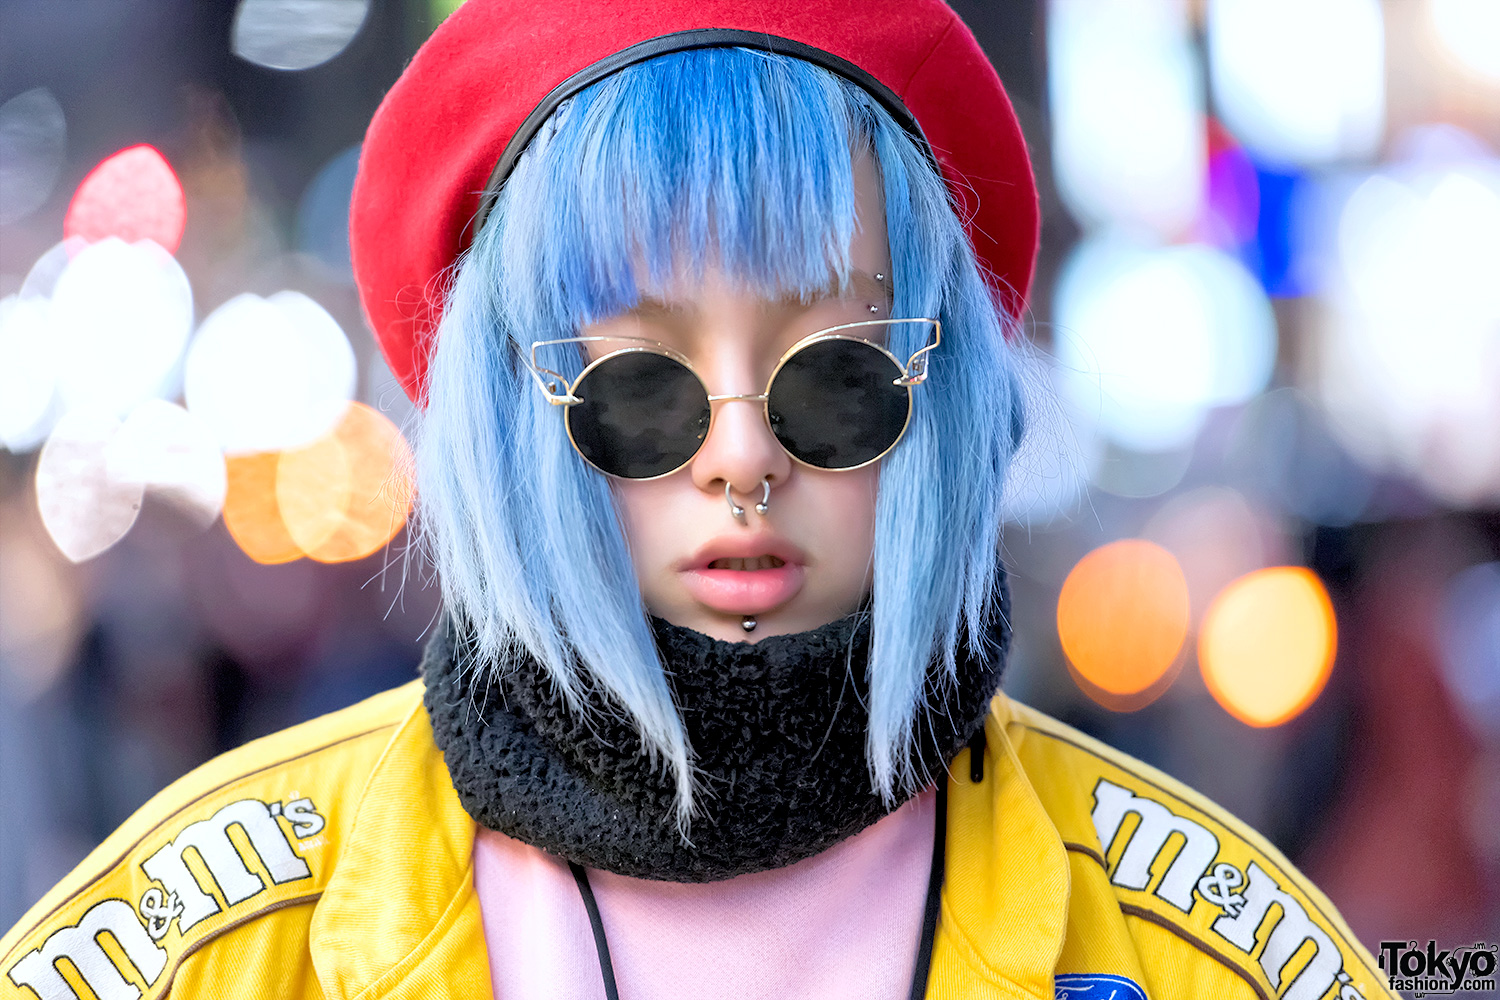 Freak City, Dog Harajuku & Moschino Street Fashion in Tokyo